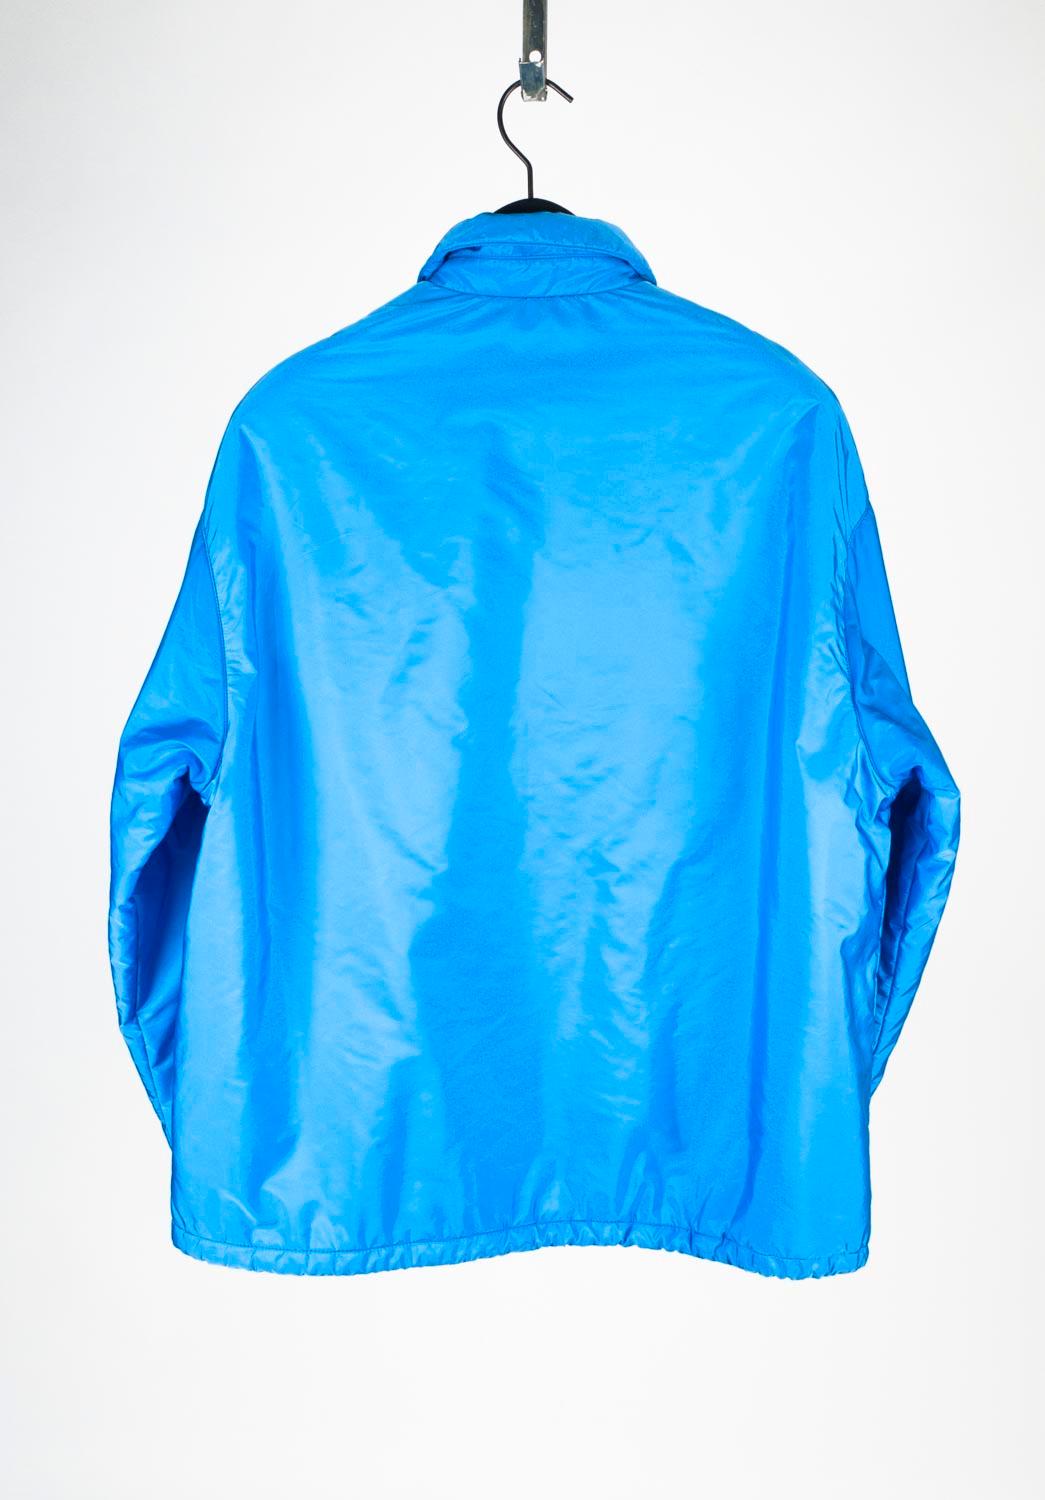 Prada Nylon blue jacket relaxed fit oversized Medium, S641  For Sale 1